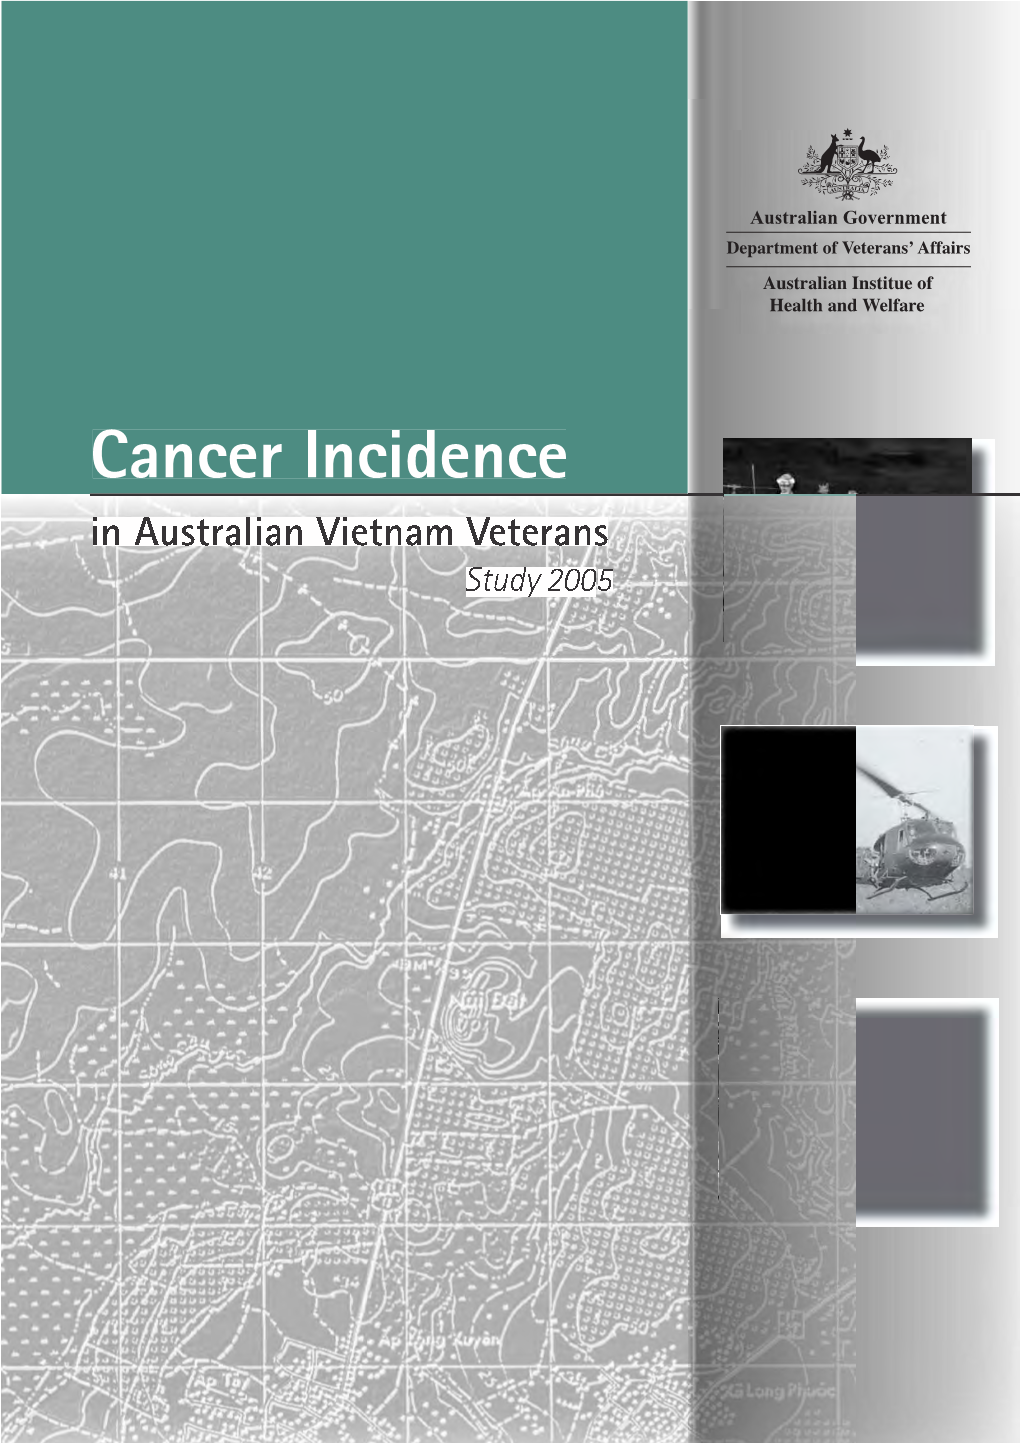 Cancer Incidence in Australian Vietnam Veterans Study 2005